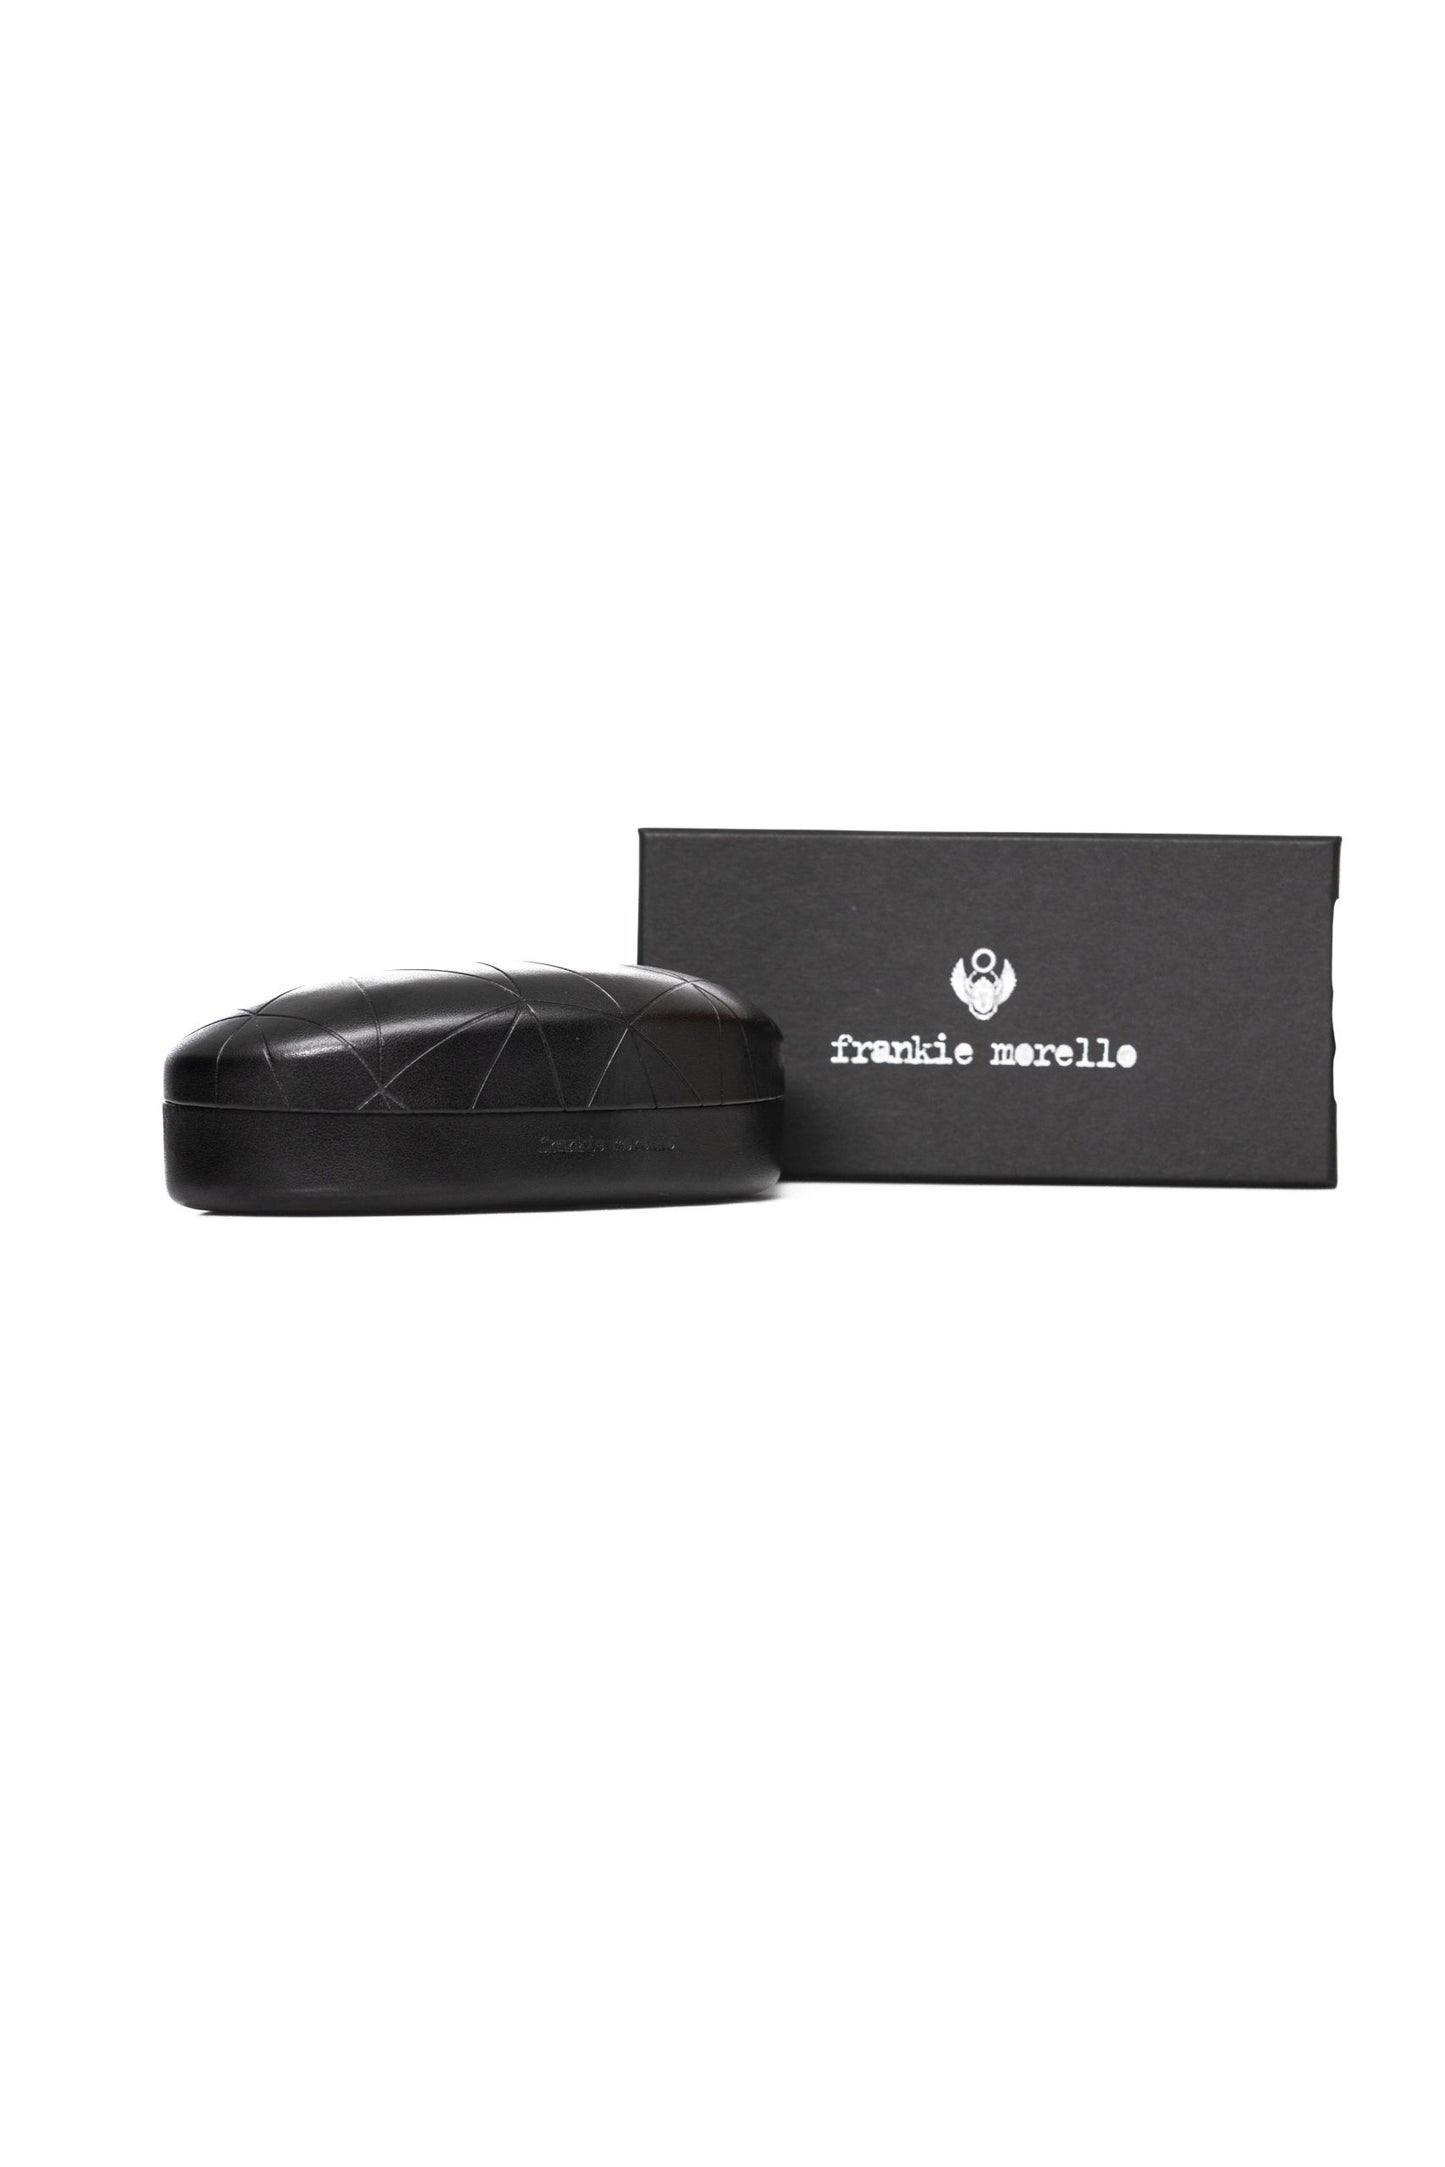 Frankie Morello FRMO-22127 Black Metallic Fibre Sunglasses